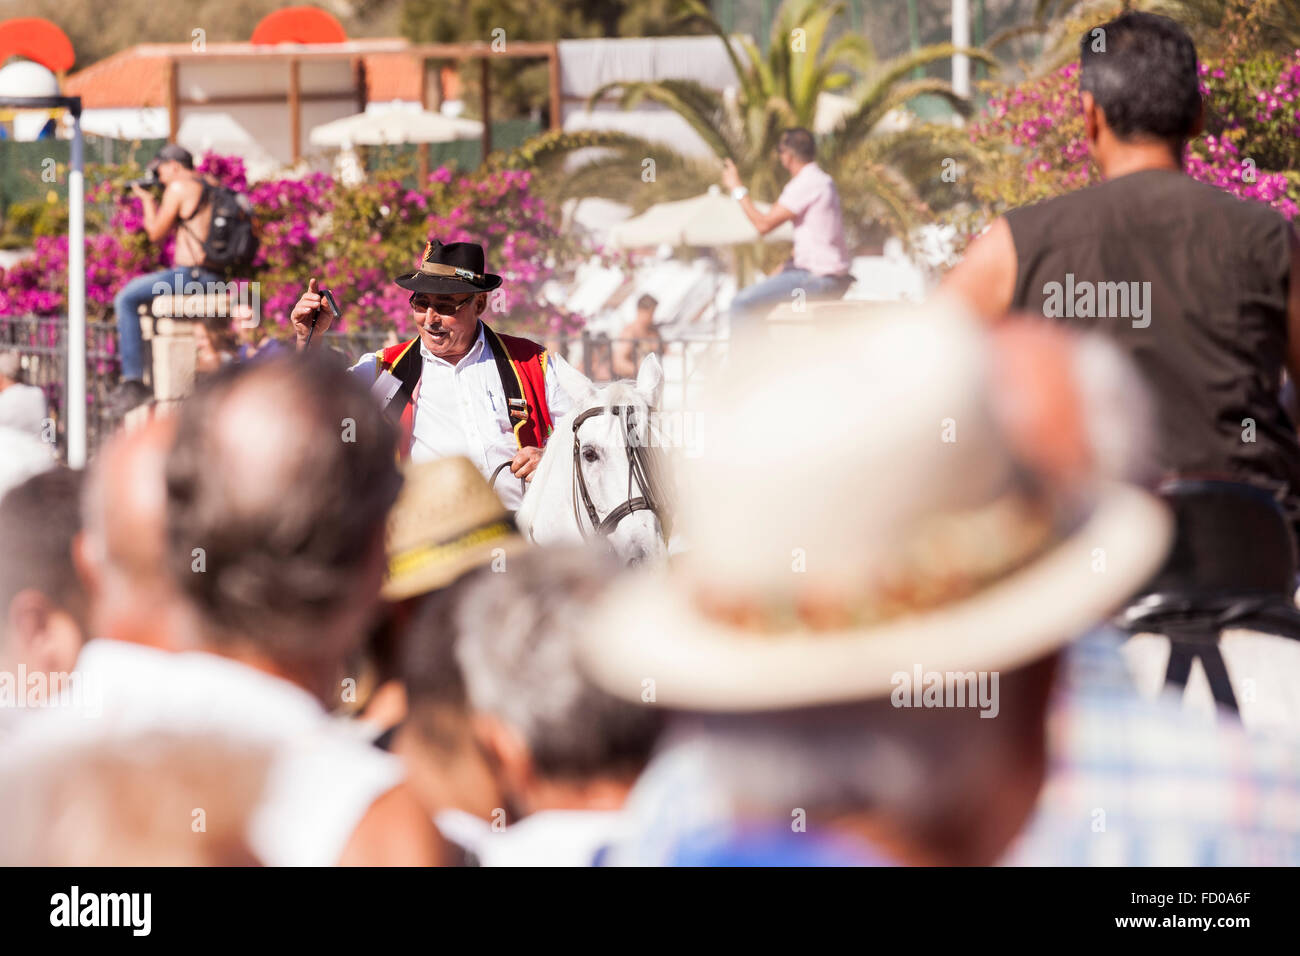 Jinetes a caballo a través de la multitud en la fiesta de San Sebastián, Costa Adeje, Tenerife. Foto de stock